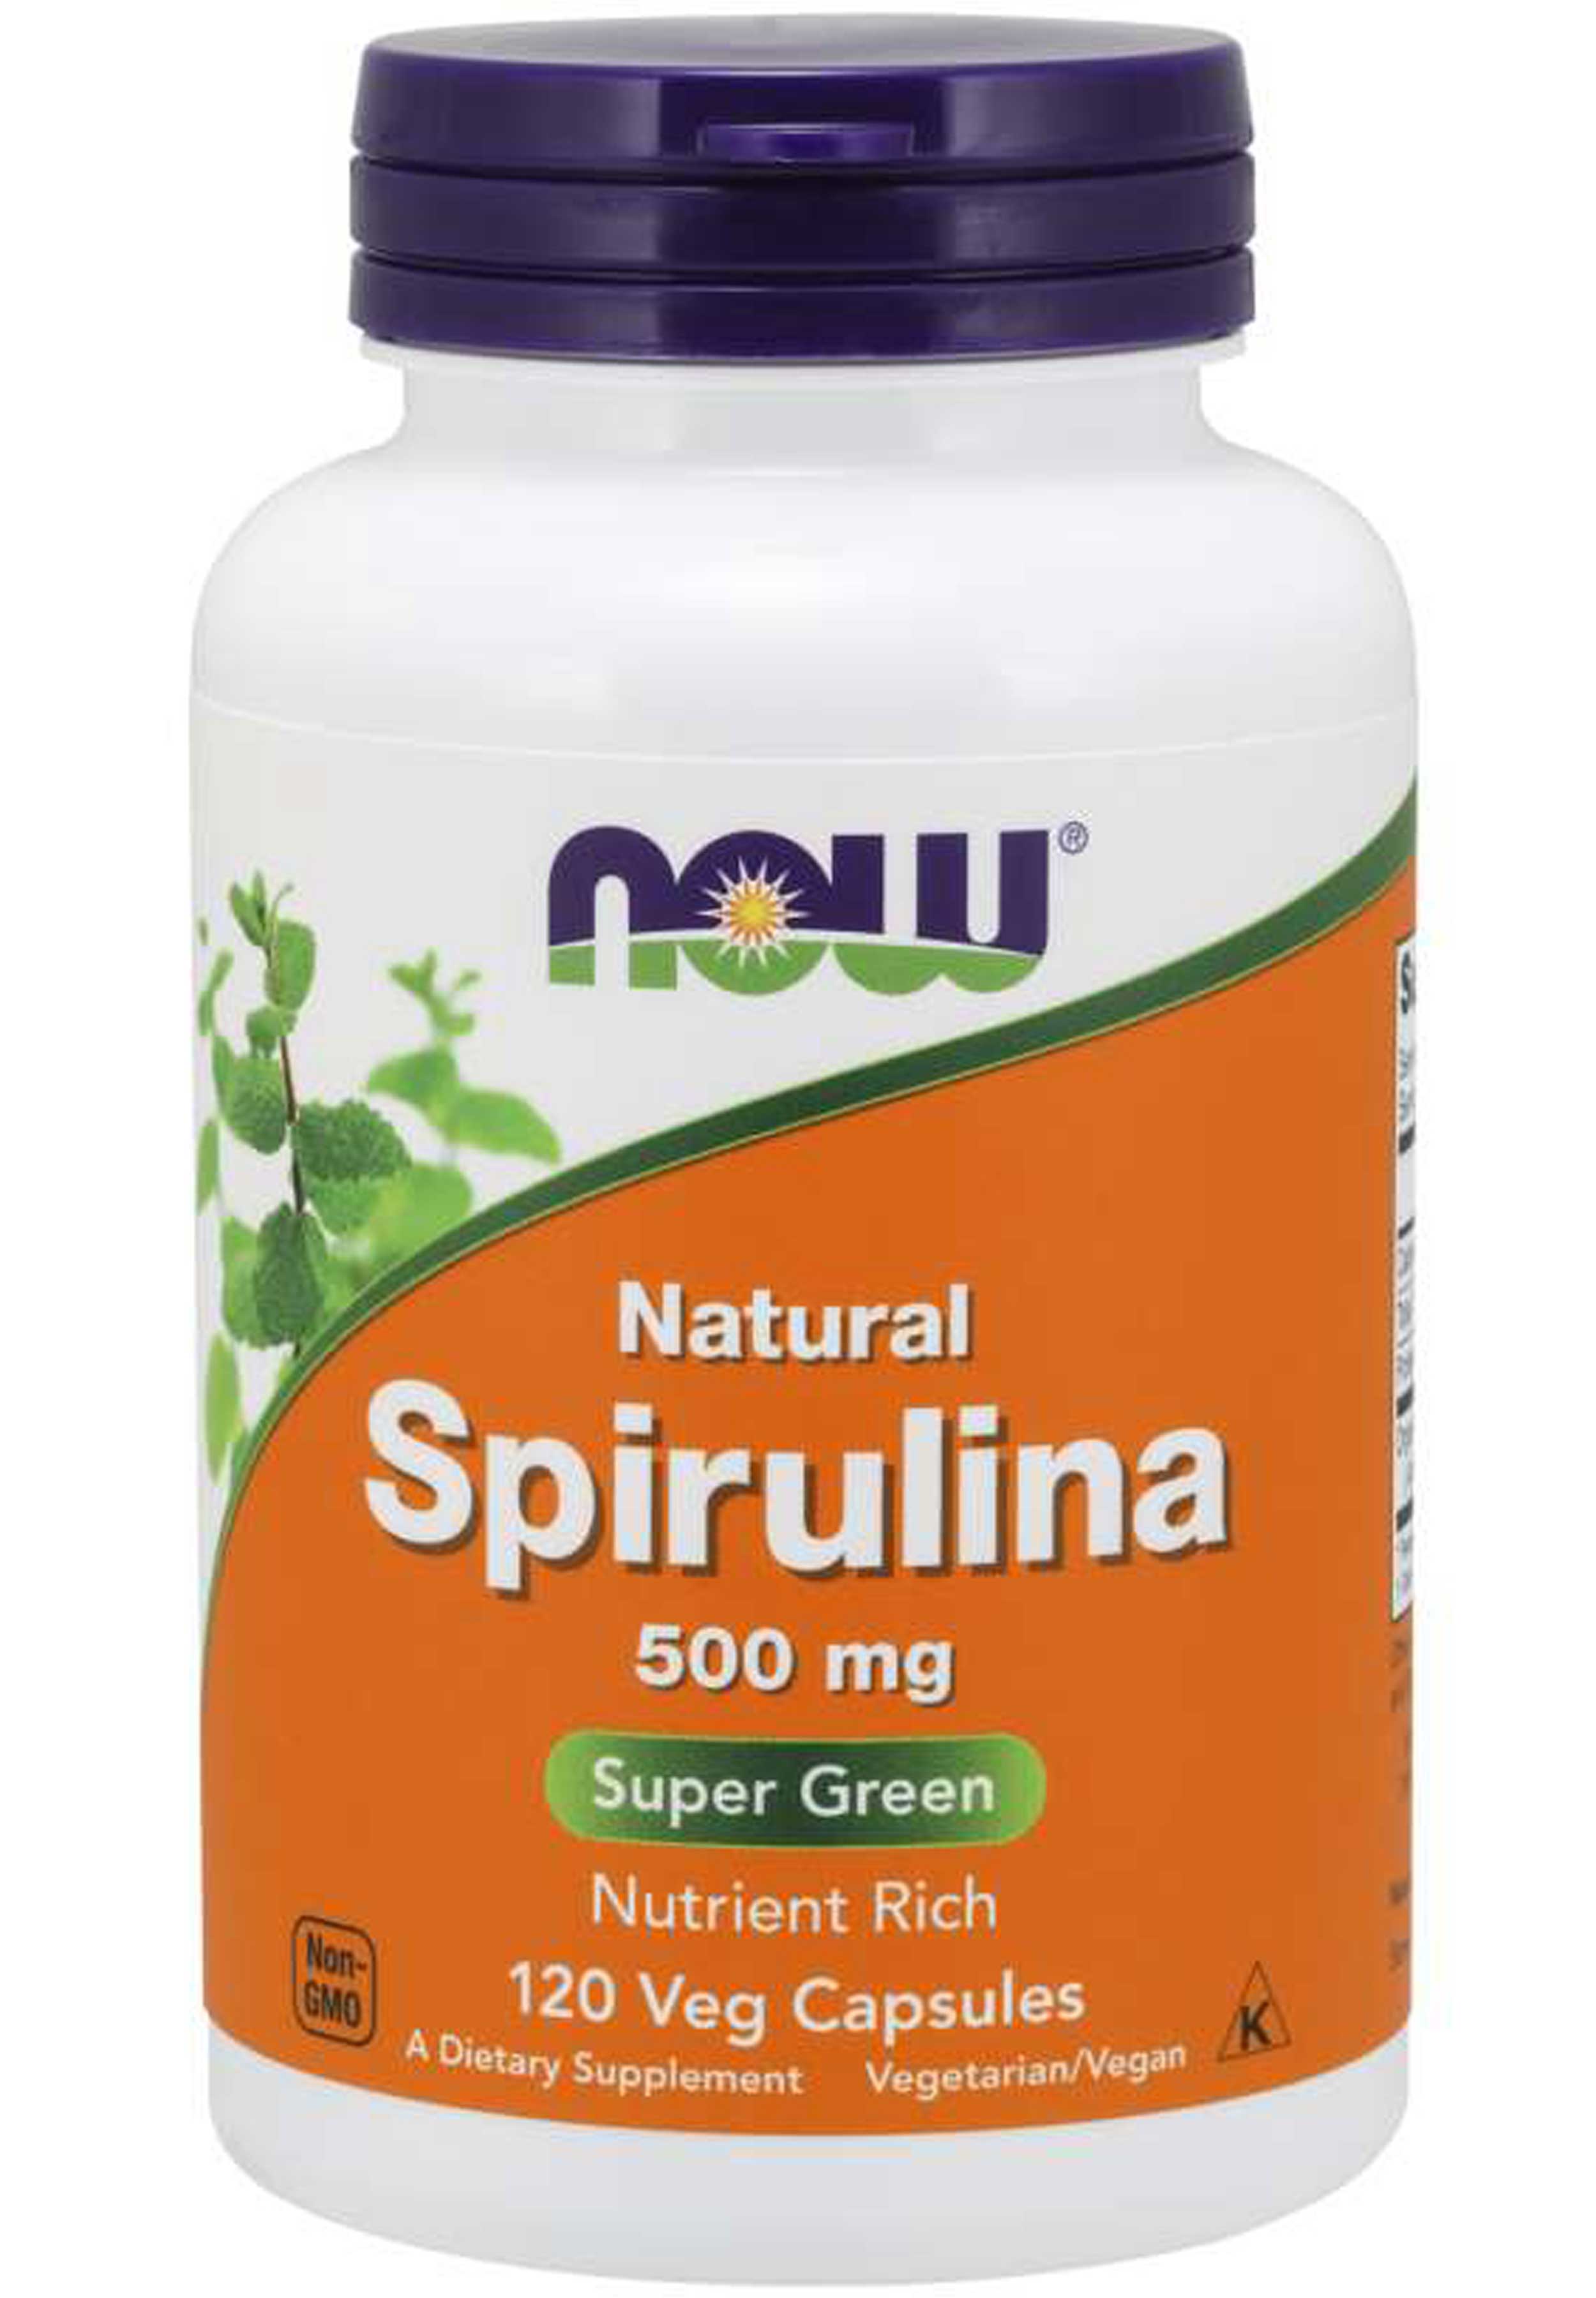 NOW Natural Spirulina 500 mg